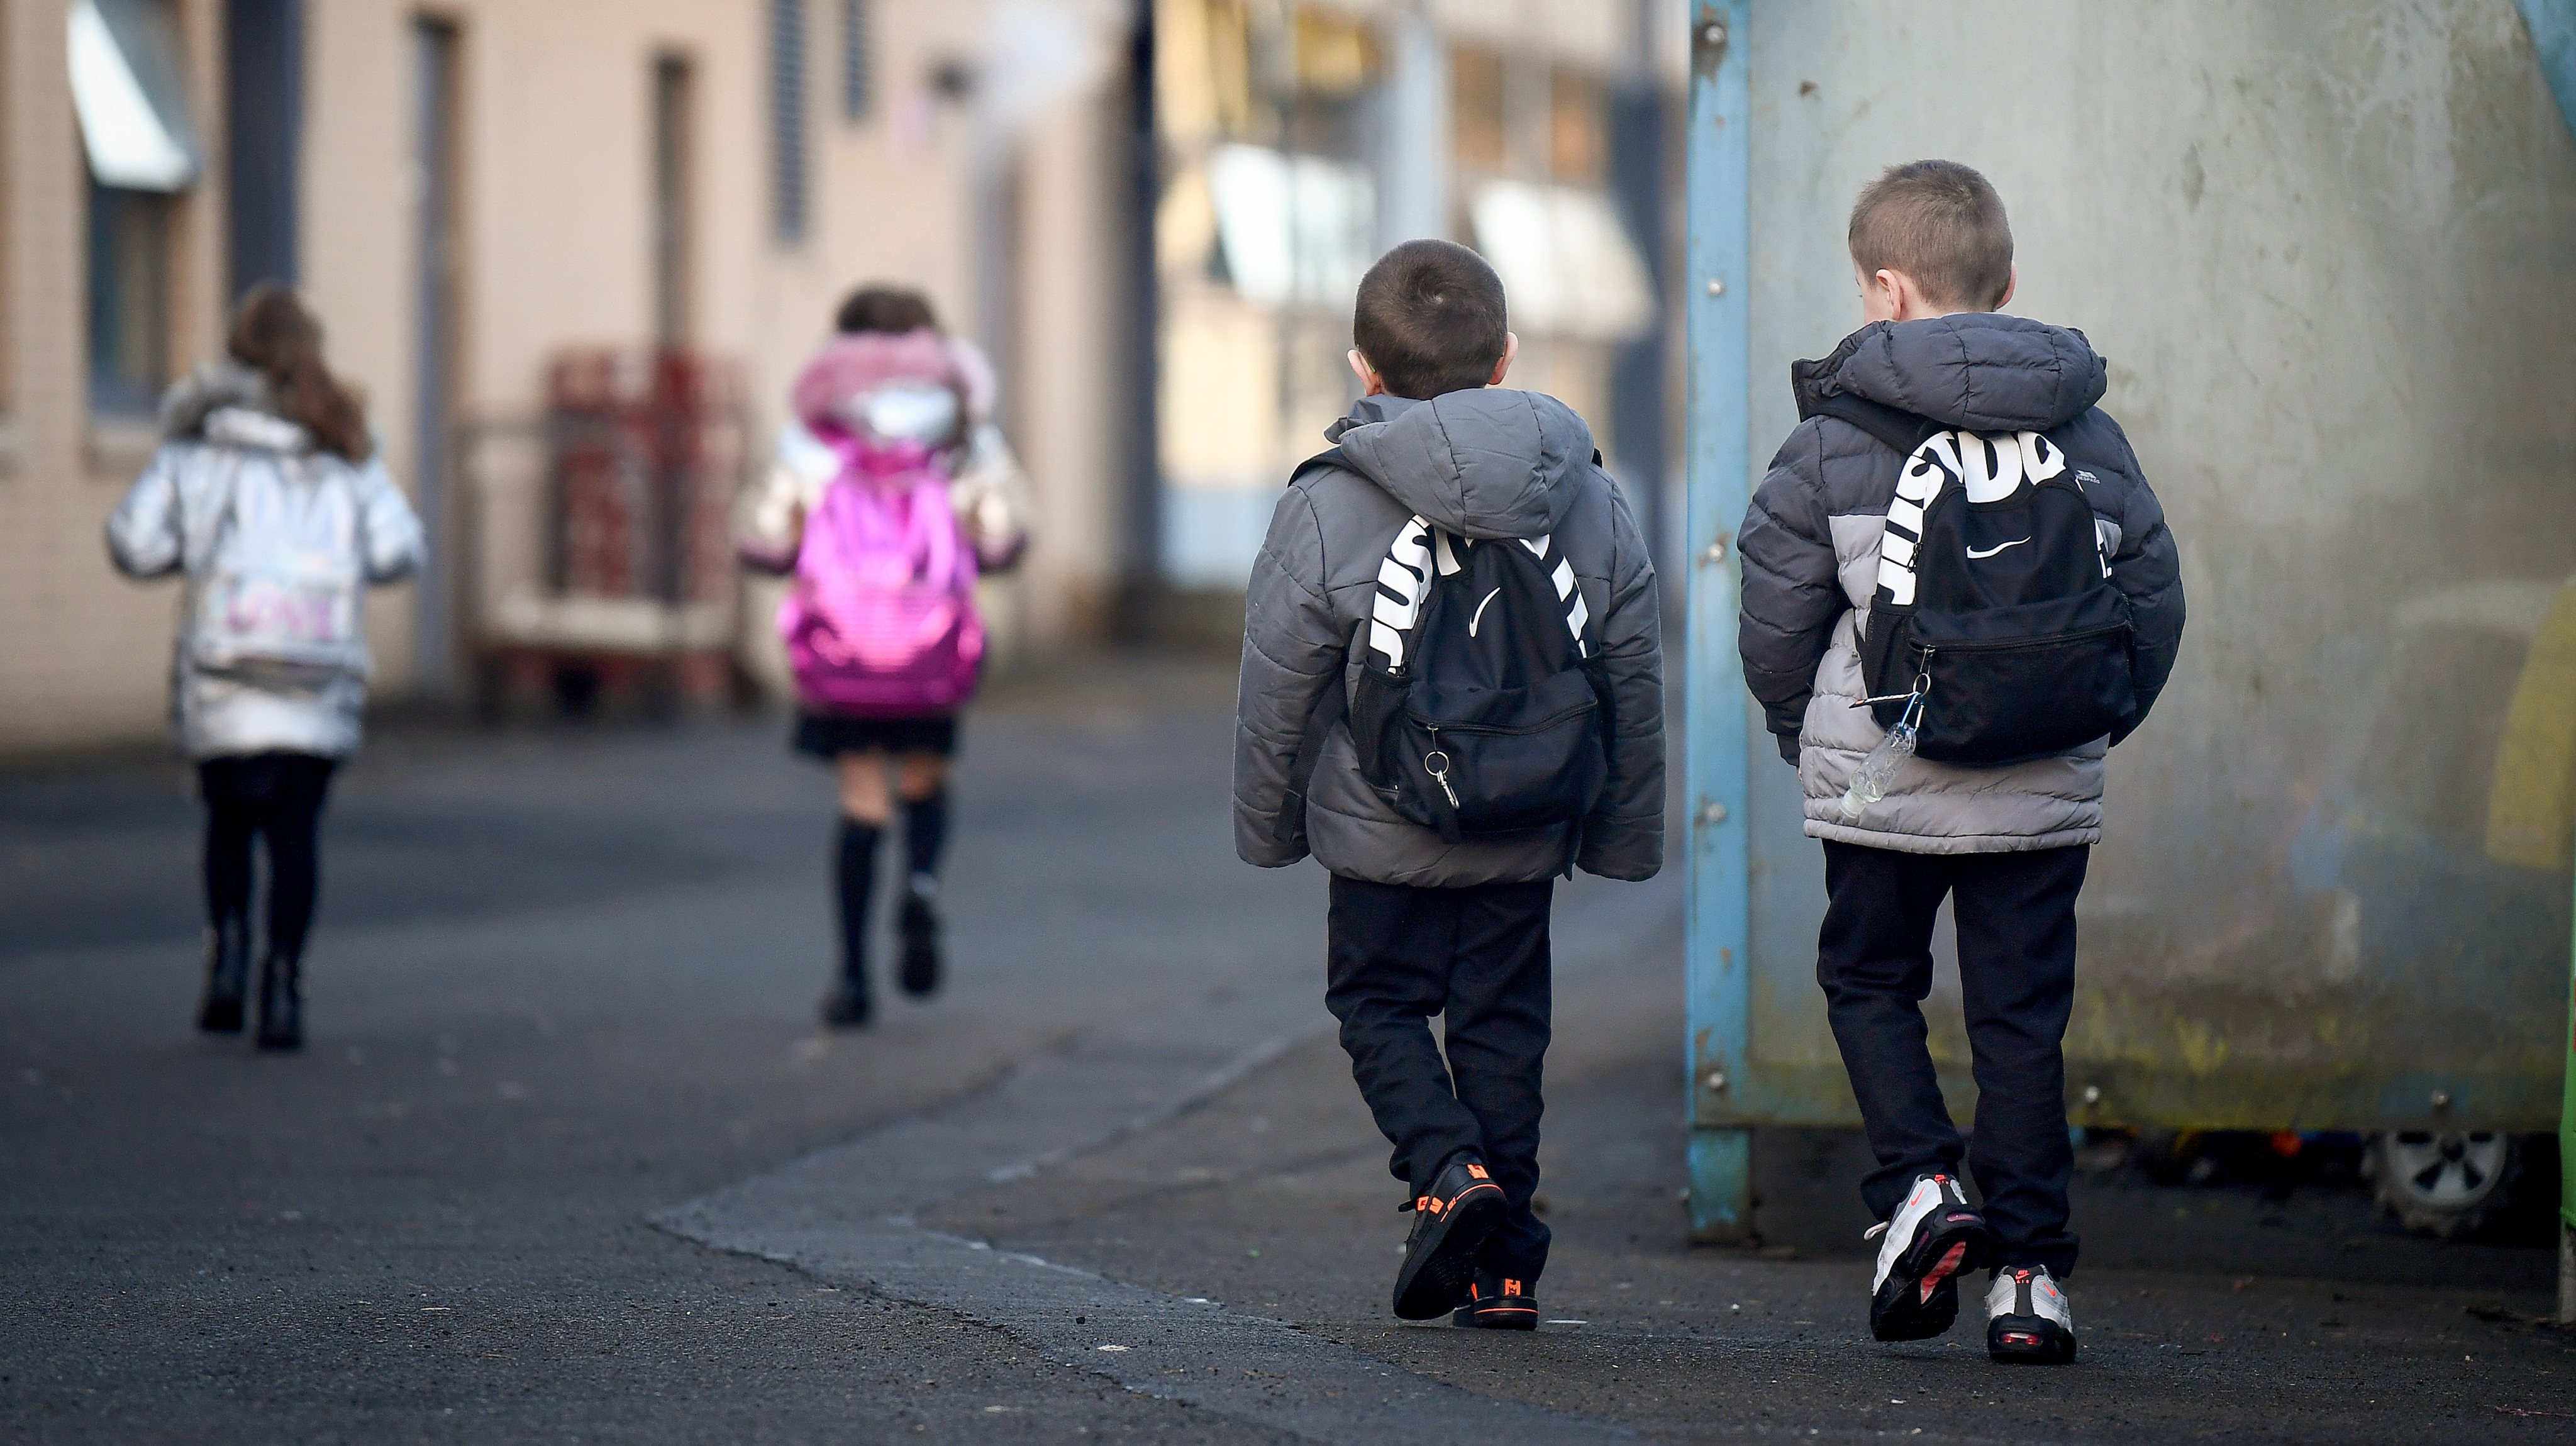 Scottish Schoolchildren Return To The Classroom After Coronavirus Lockdown